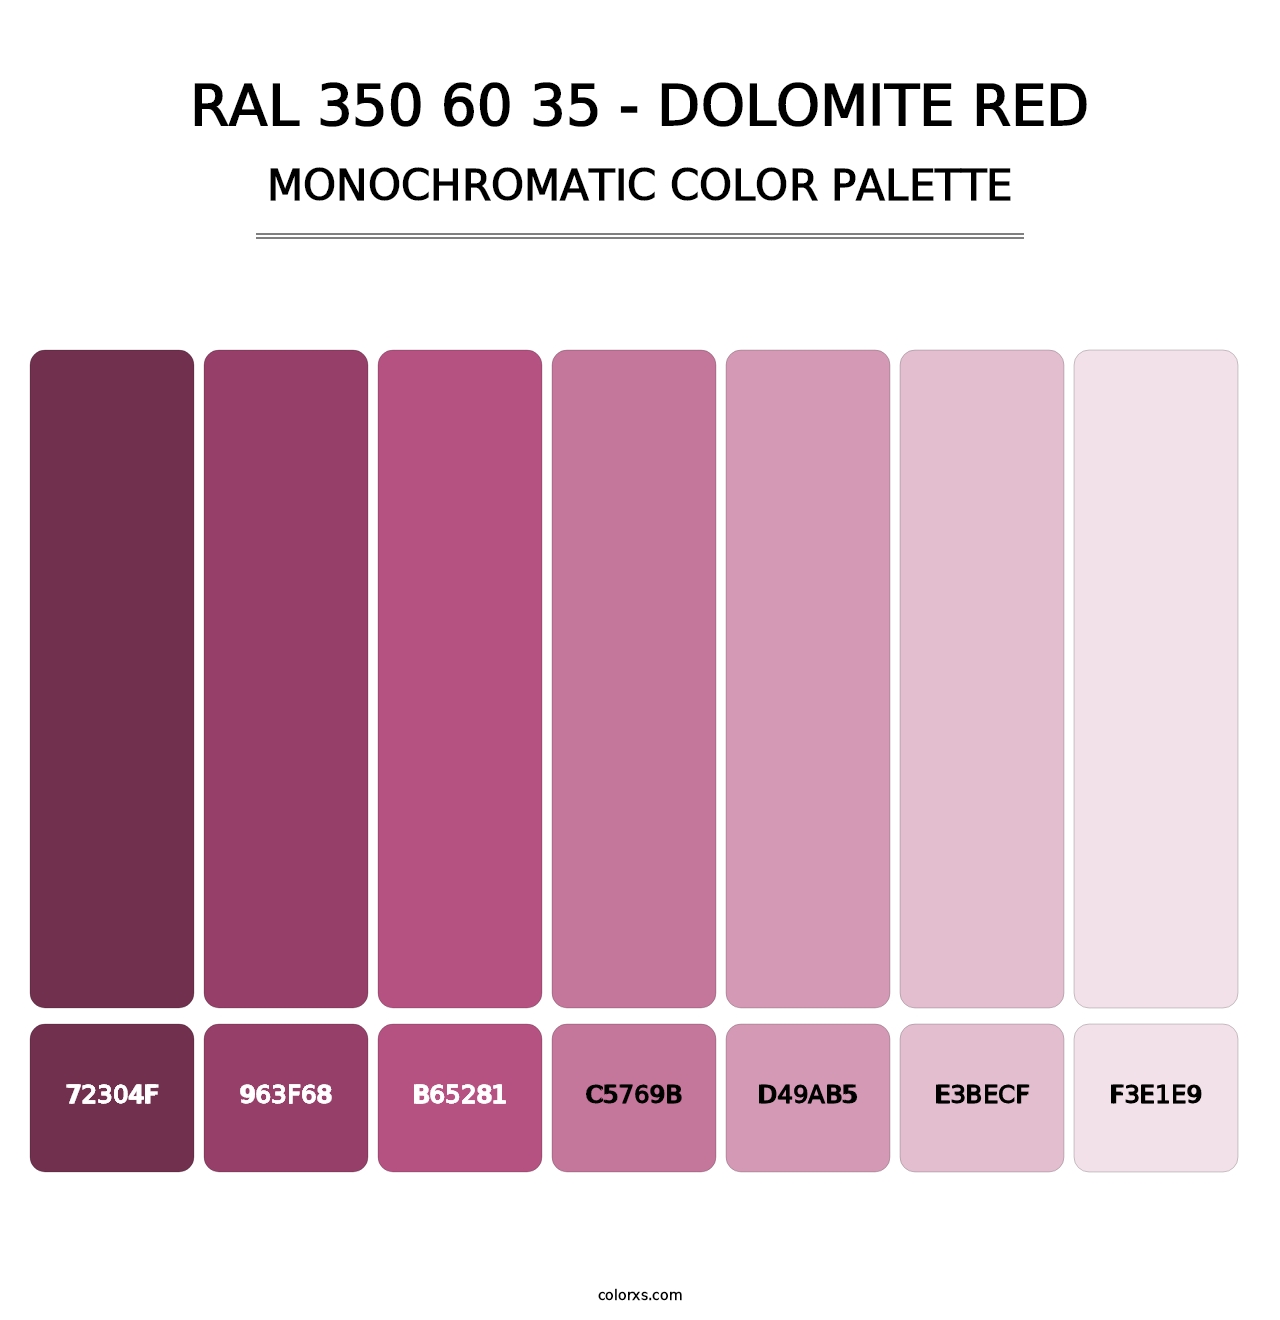 RAL 350 60 35 - Dolomite Red - Monochromatic Color Palette